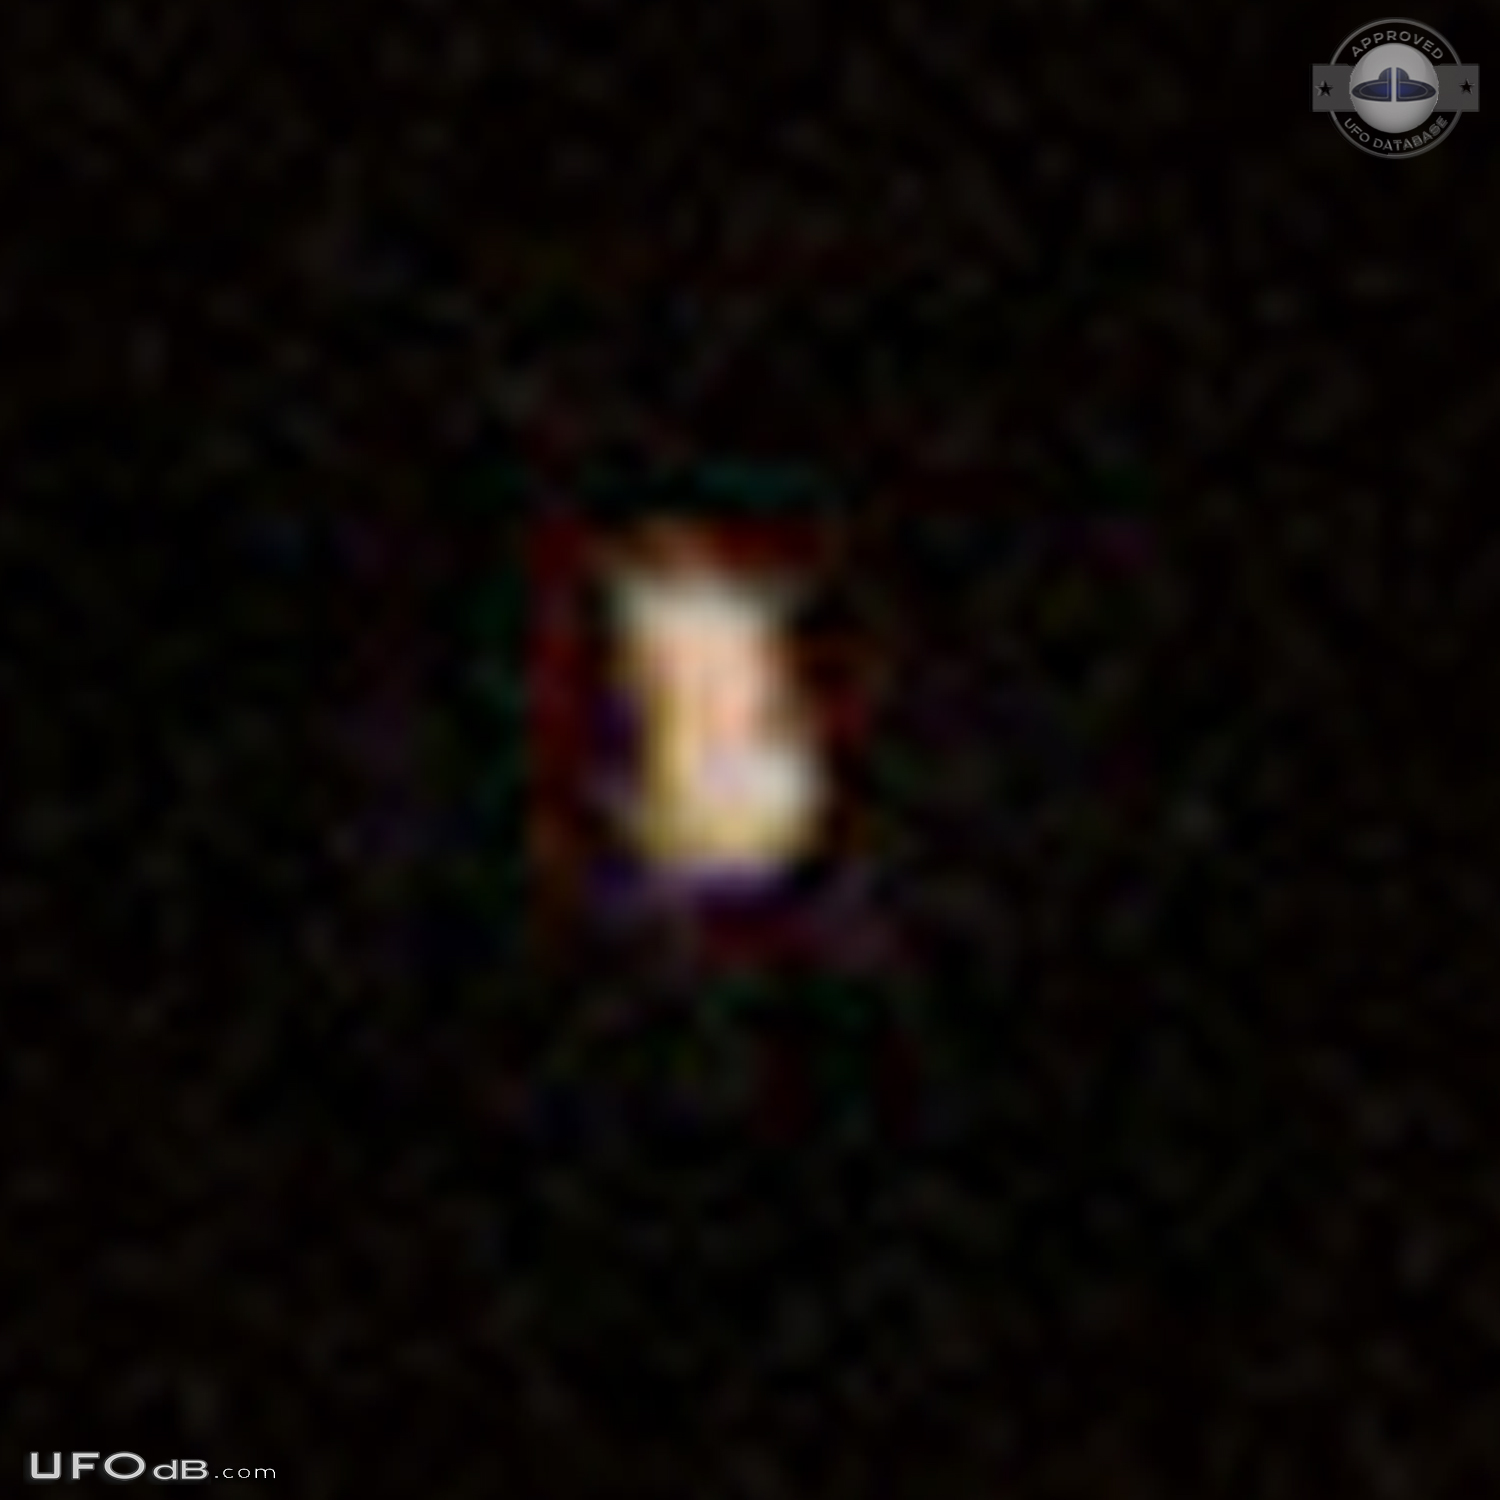 Observed 20+ white/reddish orange orbs UFOs - Louisiana USA 2015 UFO Picture #683-9